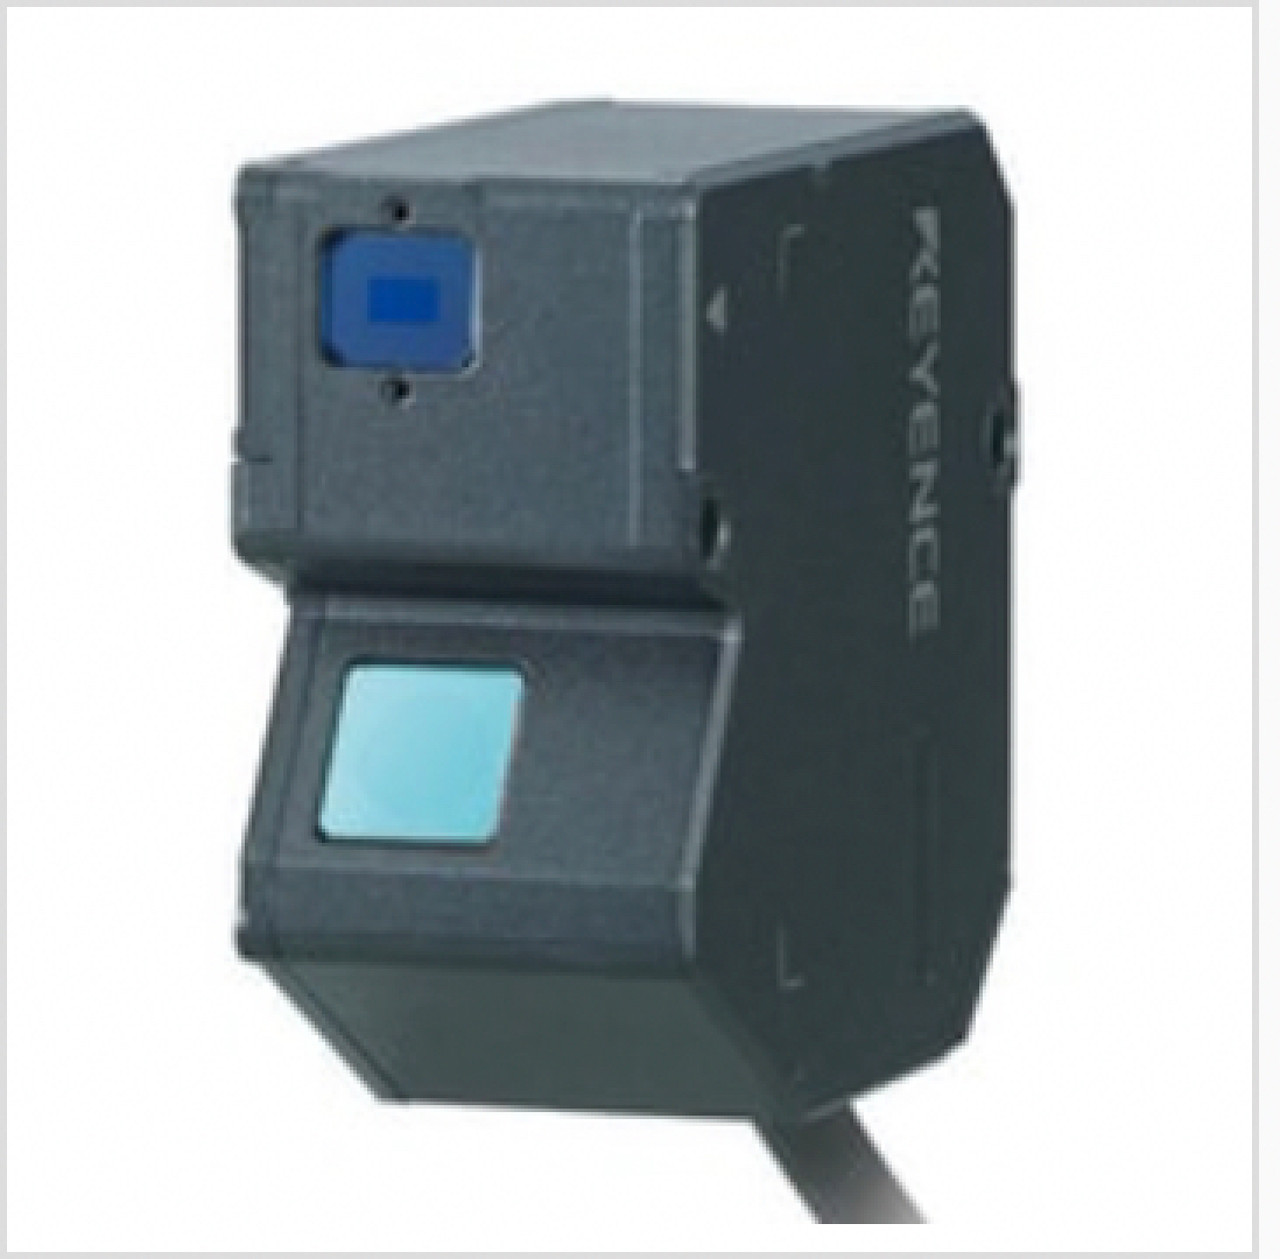 Keyence LK-H055 High-Accuracy Laser Displacement Sensor, Sensor Head, Wide Type [New]